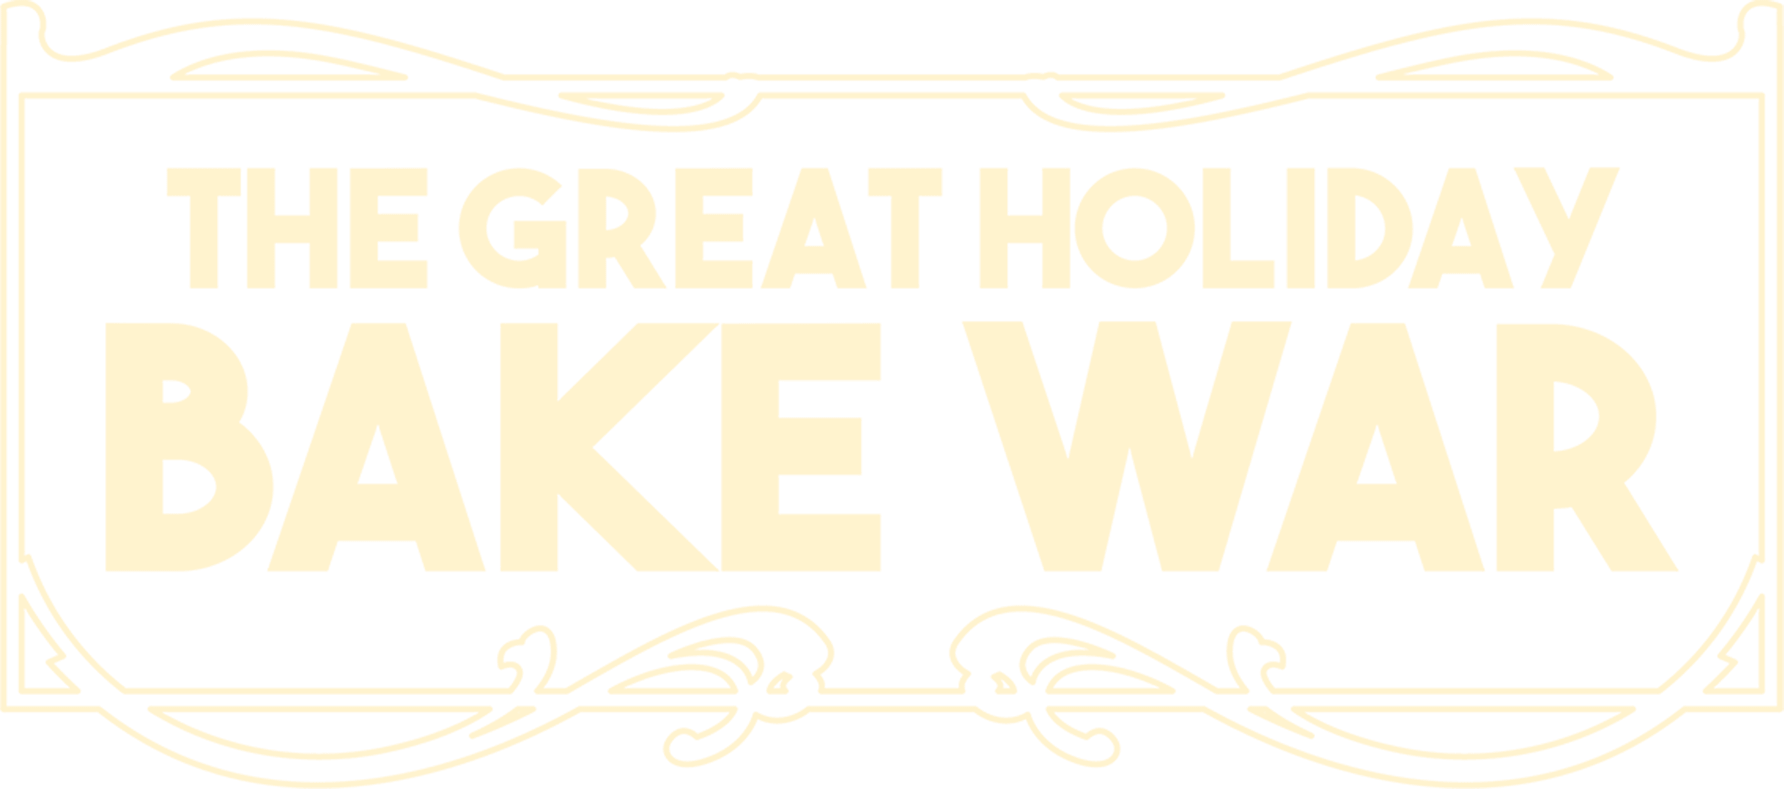 The Great Holiday Bake War logo